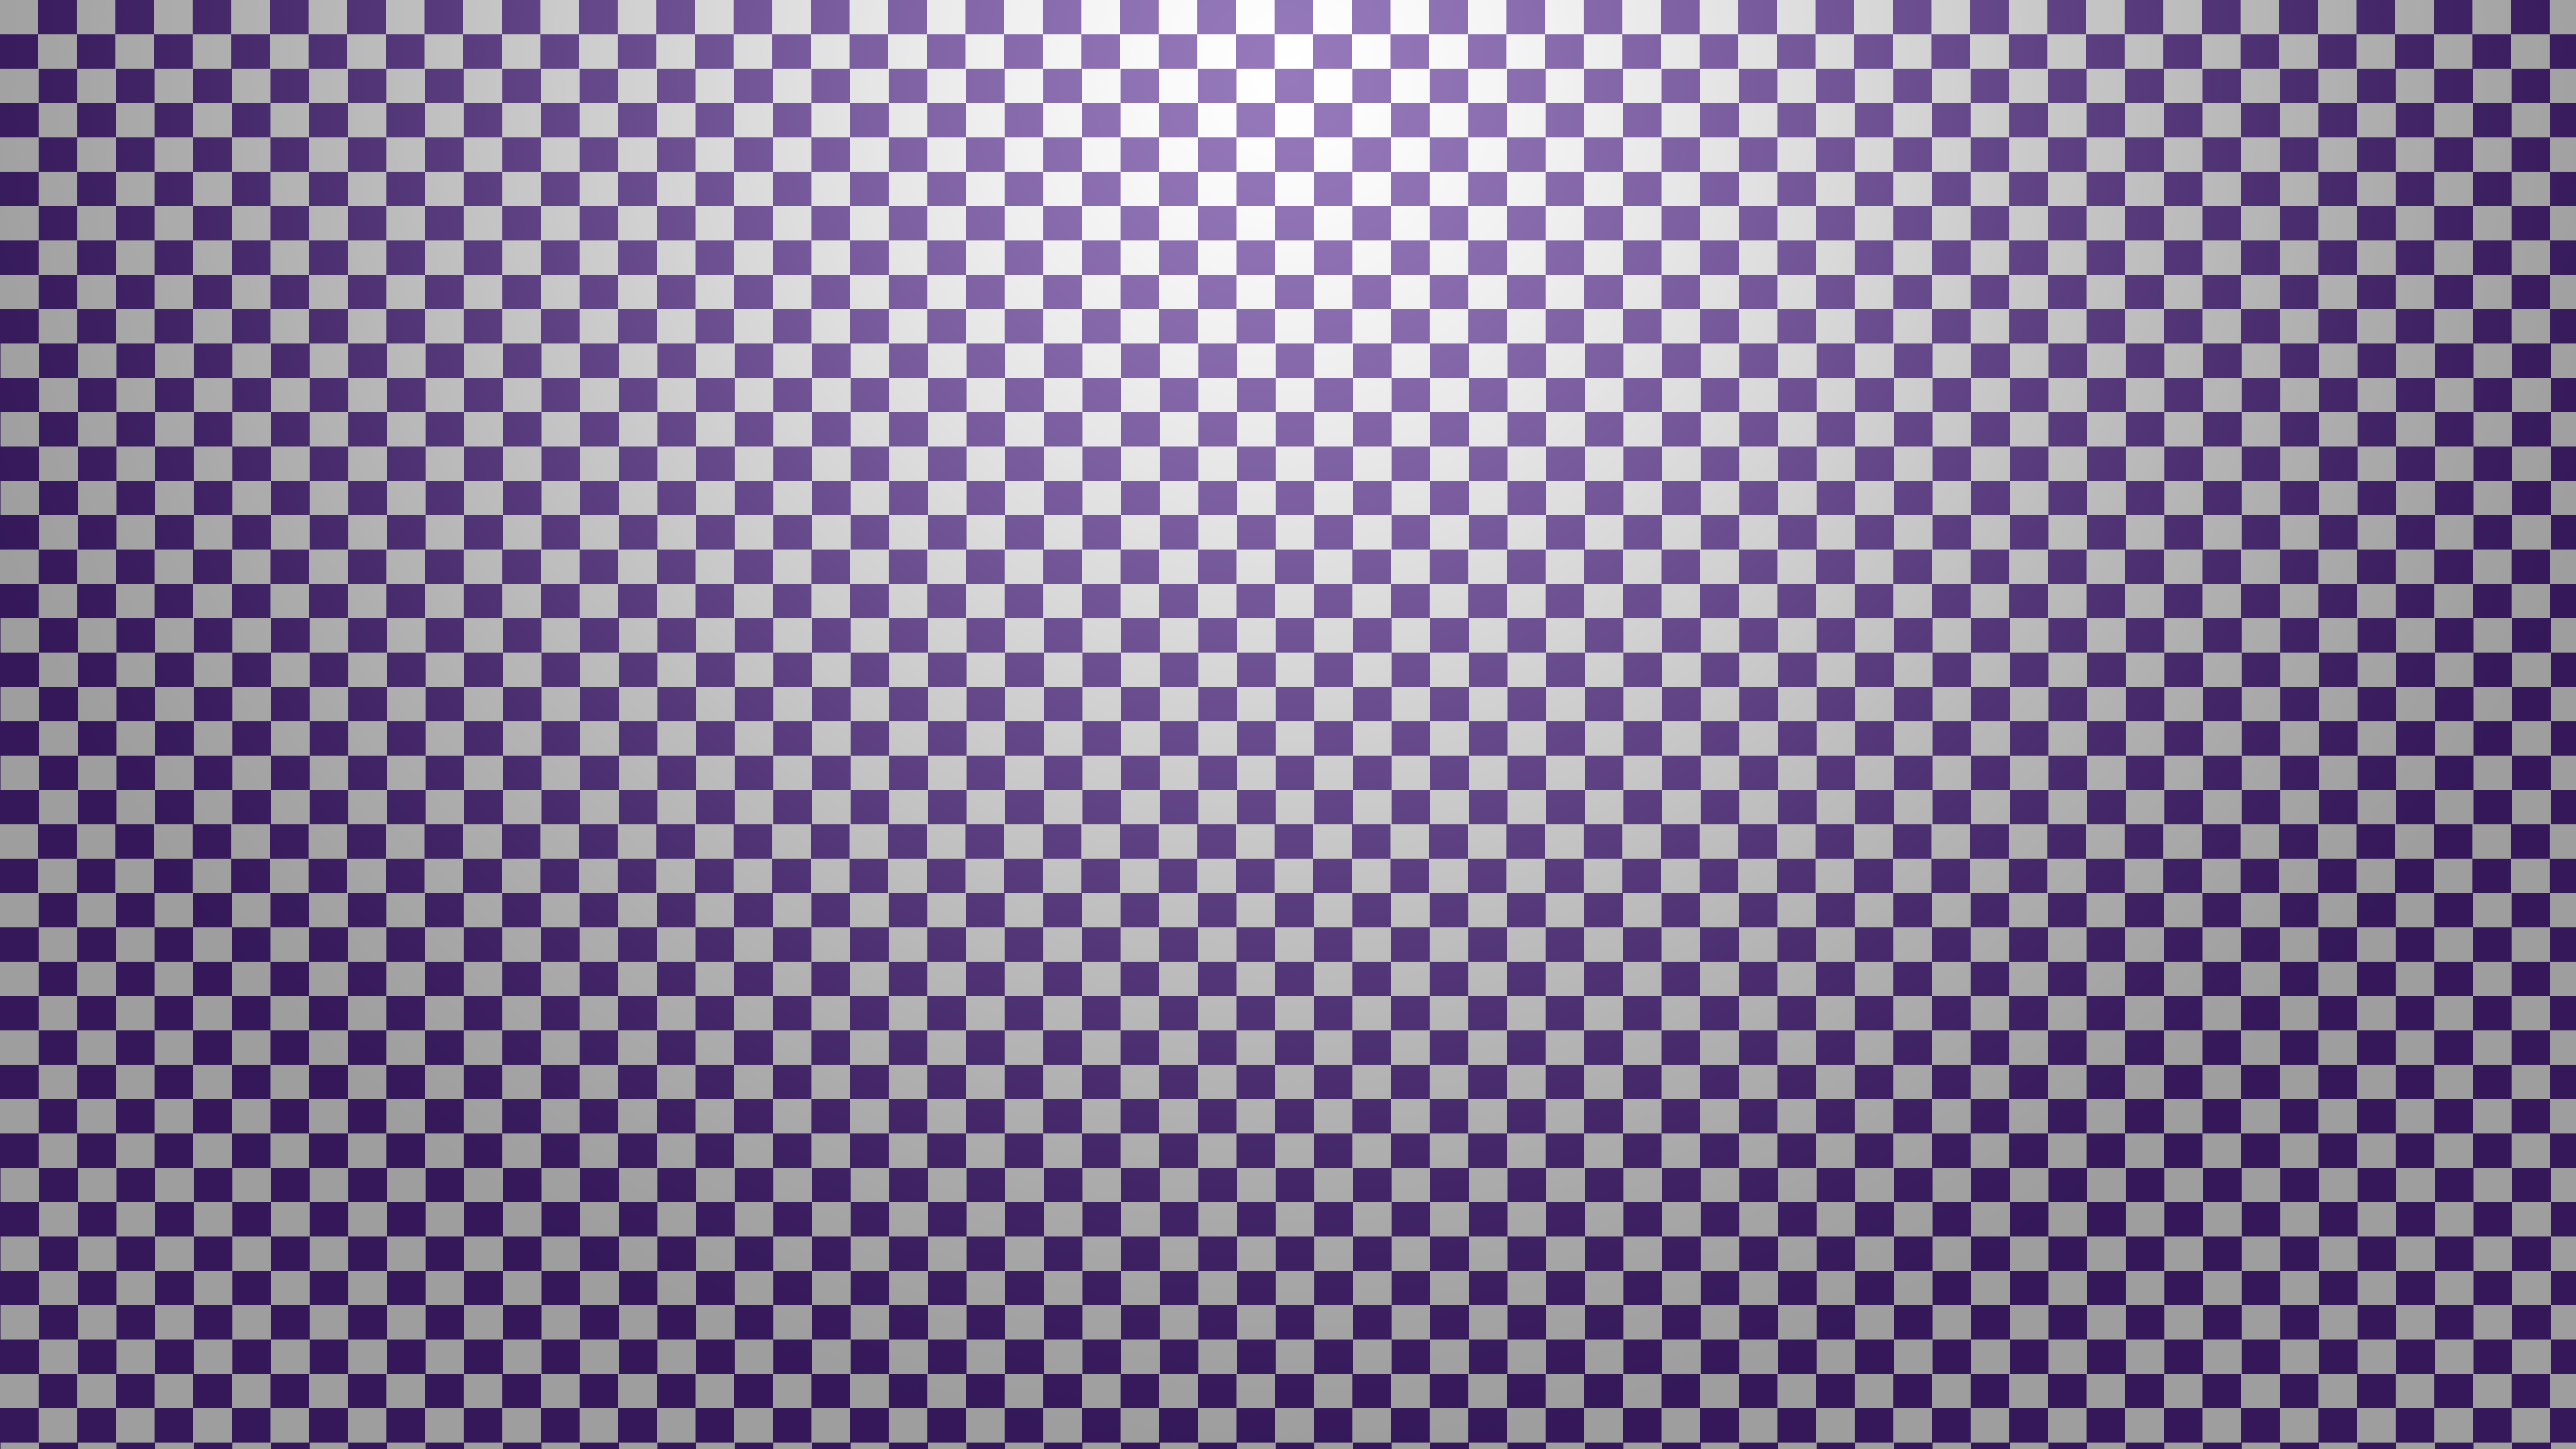 Checkered Patterns, HD Wallpaper & background